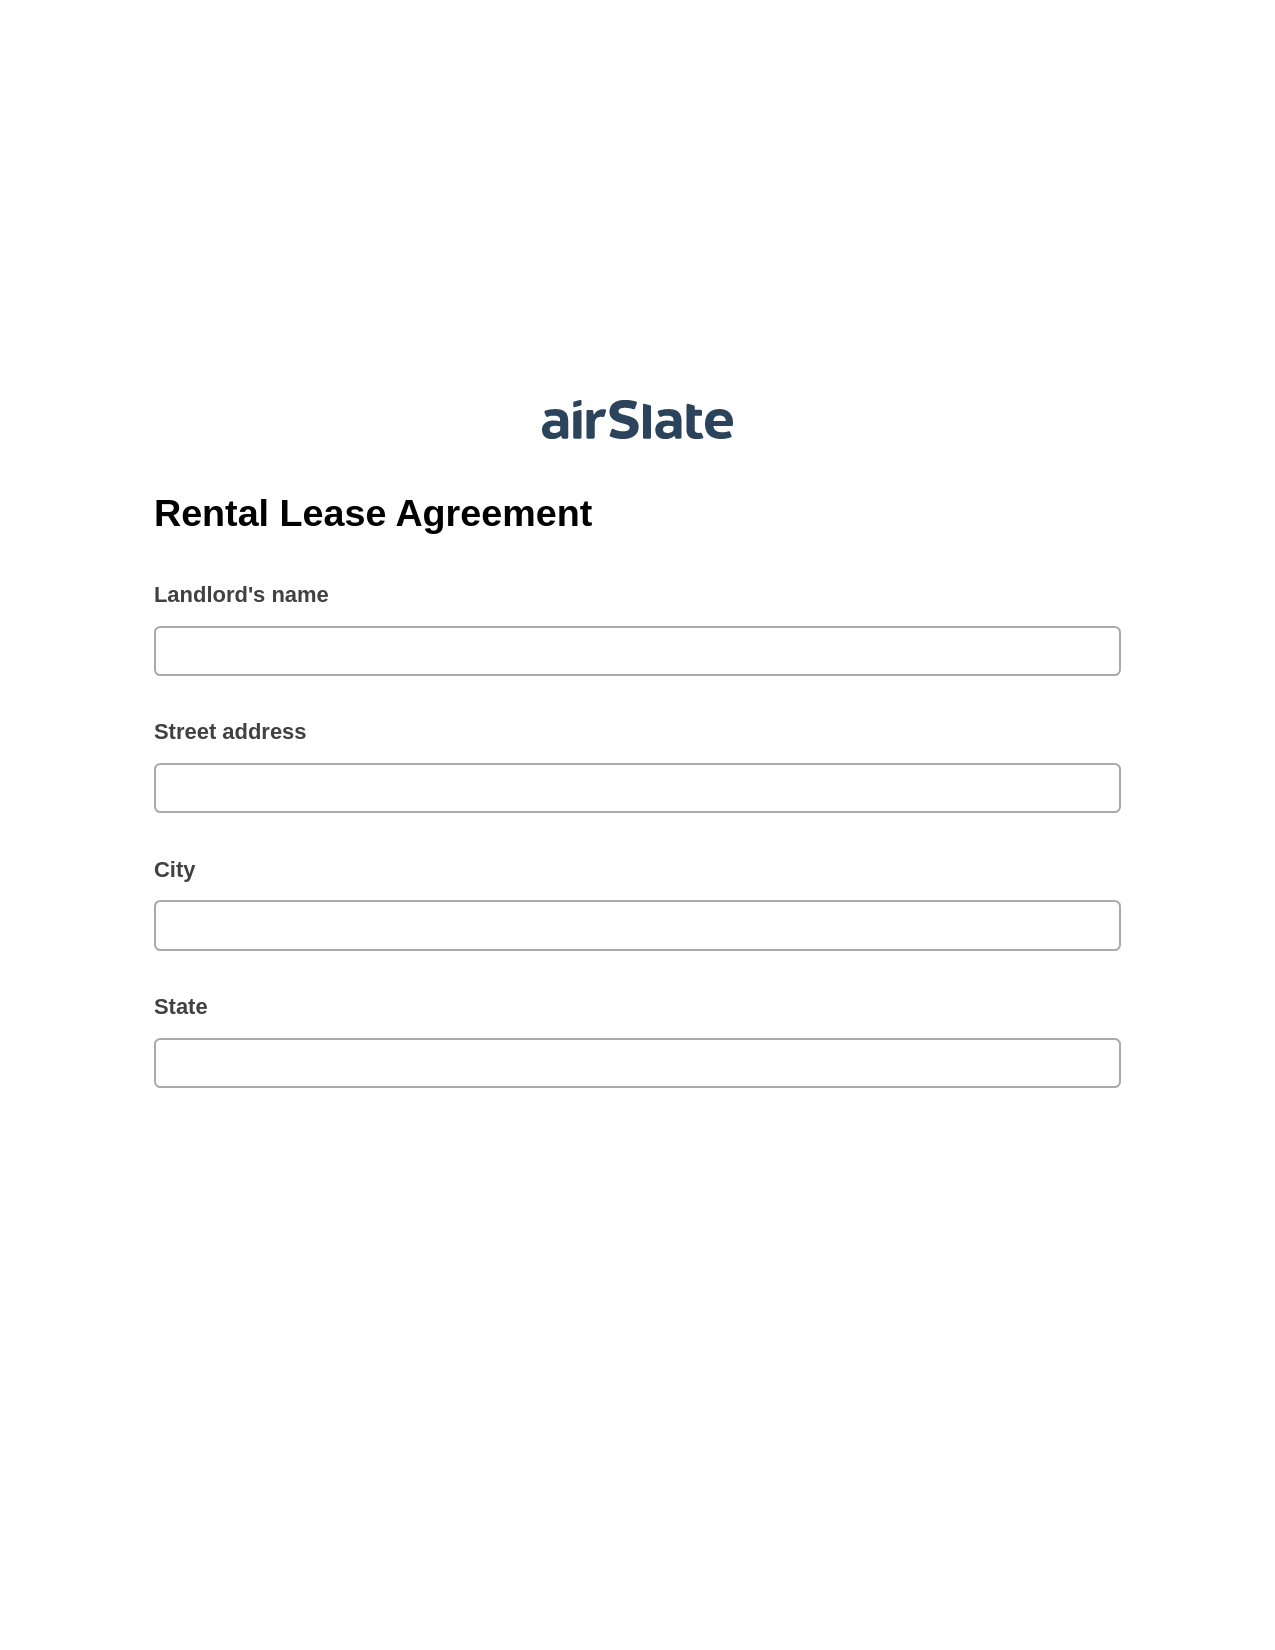 Rental Lease Agreement Pre-fill from MySQL Dropdown Options Bot, Create Slate every Google Sheet Update Bot, Dropbox Bot